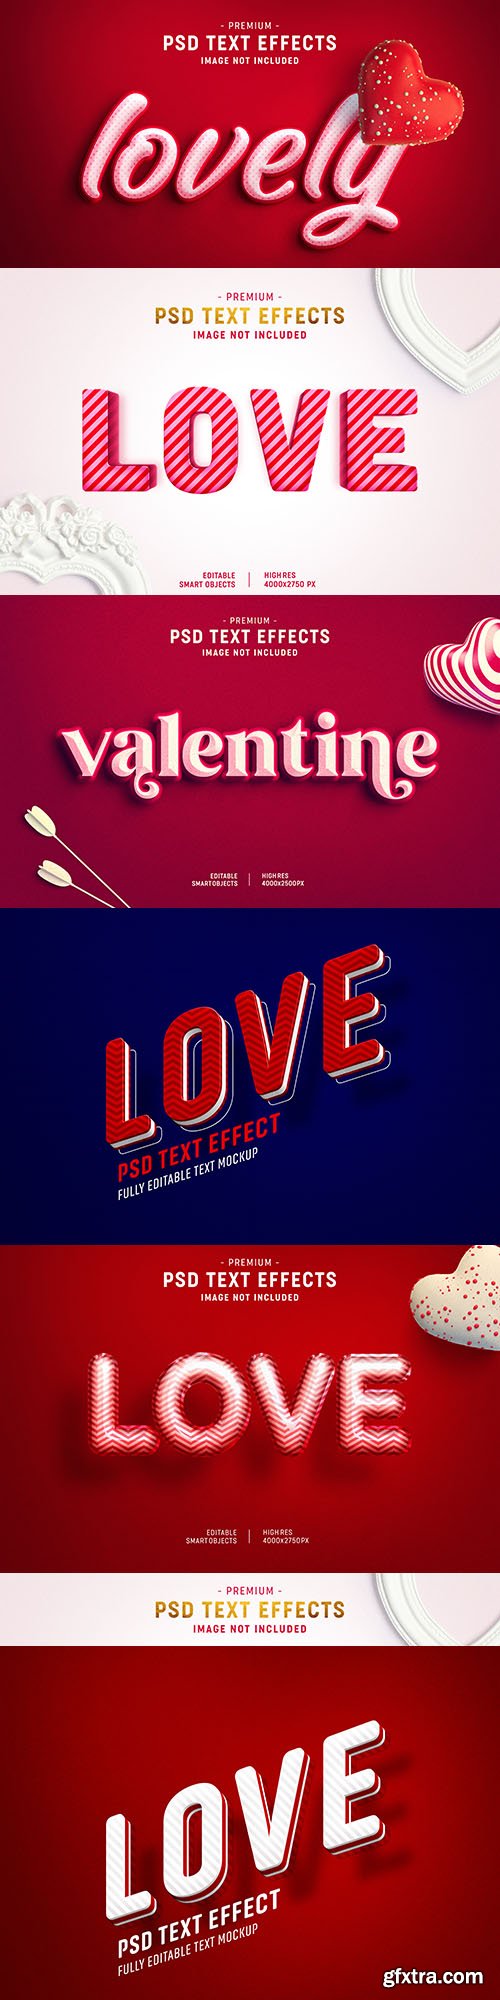 St. Valentine\'s Day romantic style Photoshop design 2